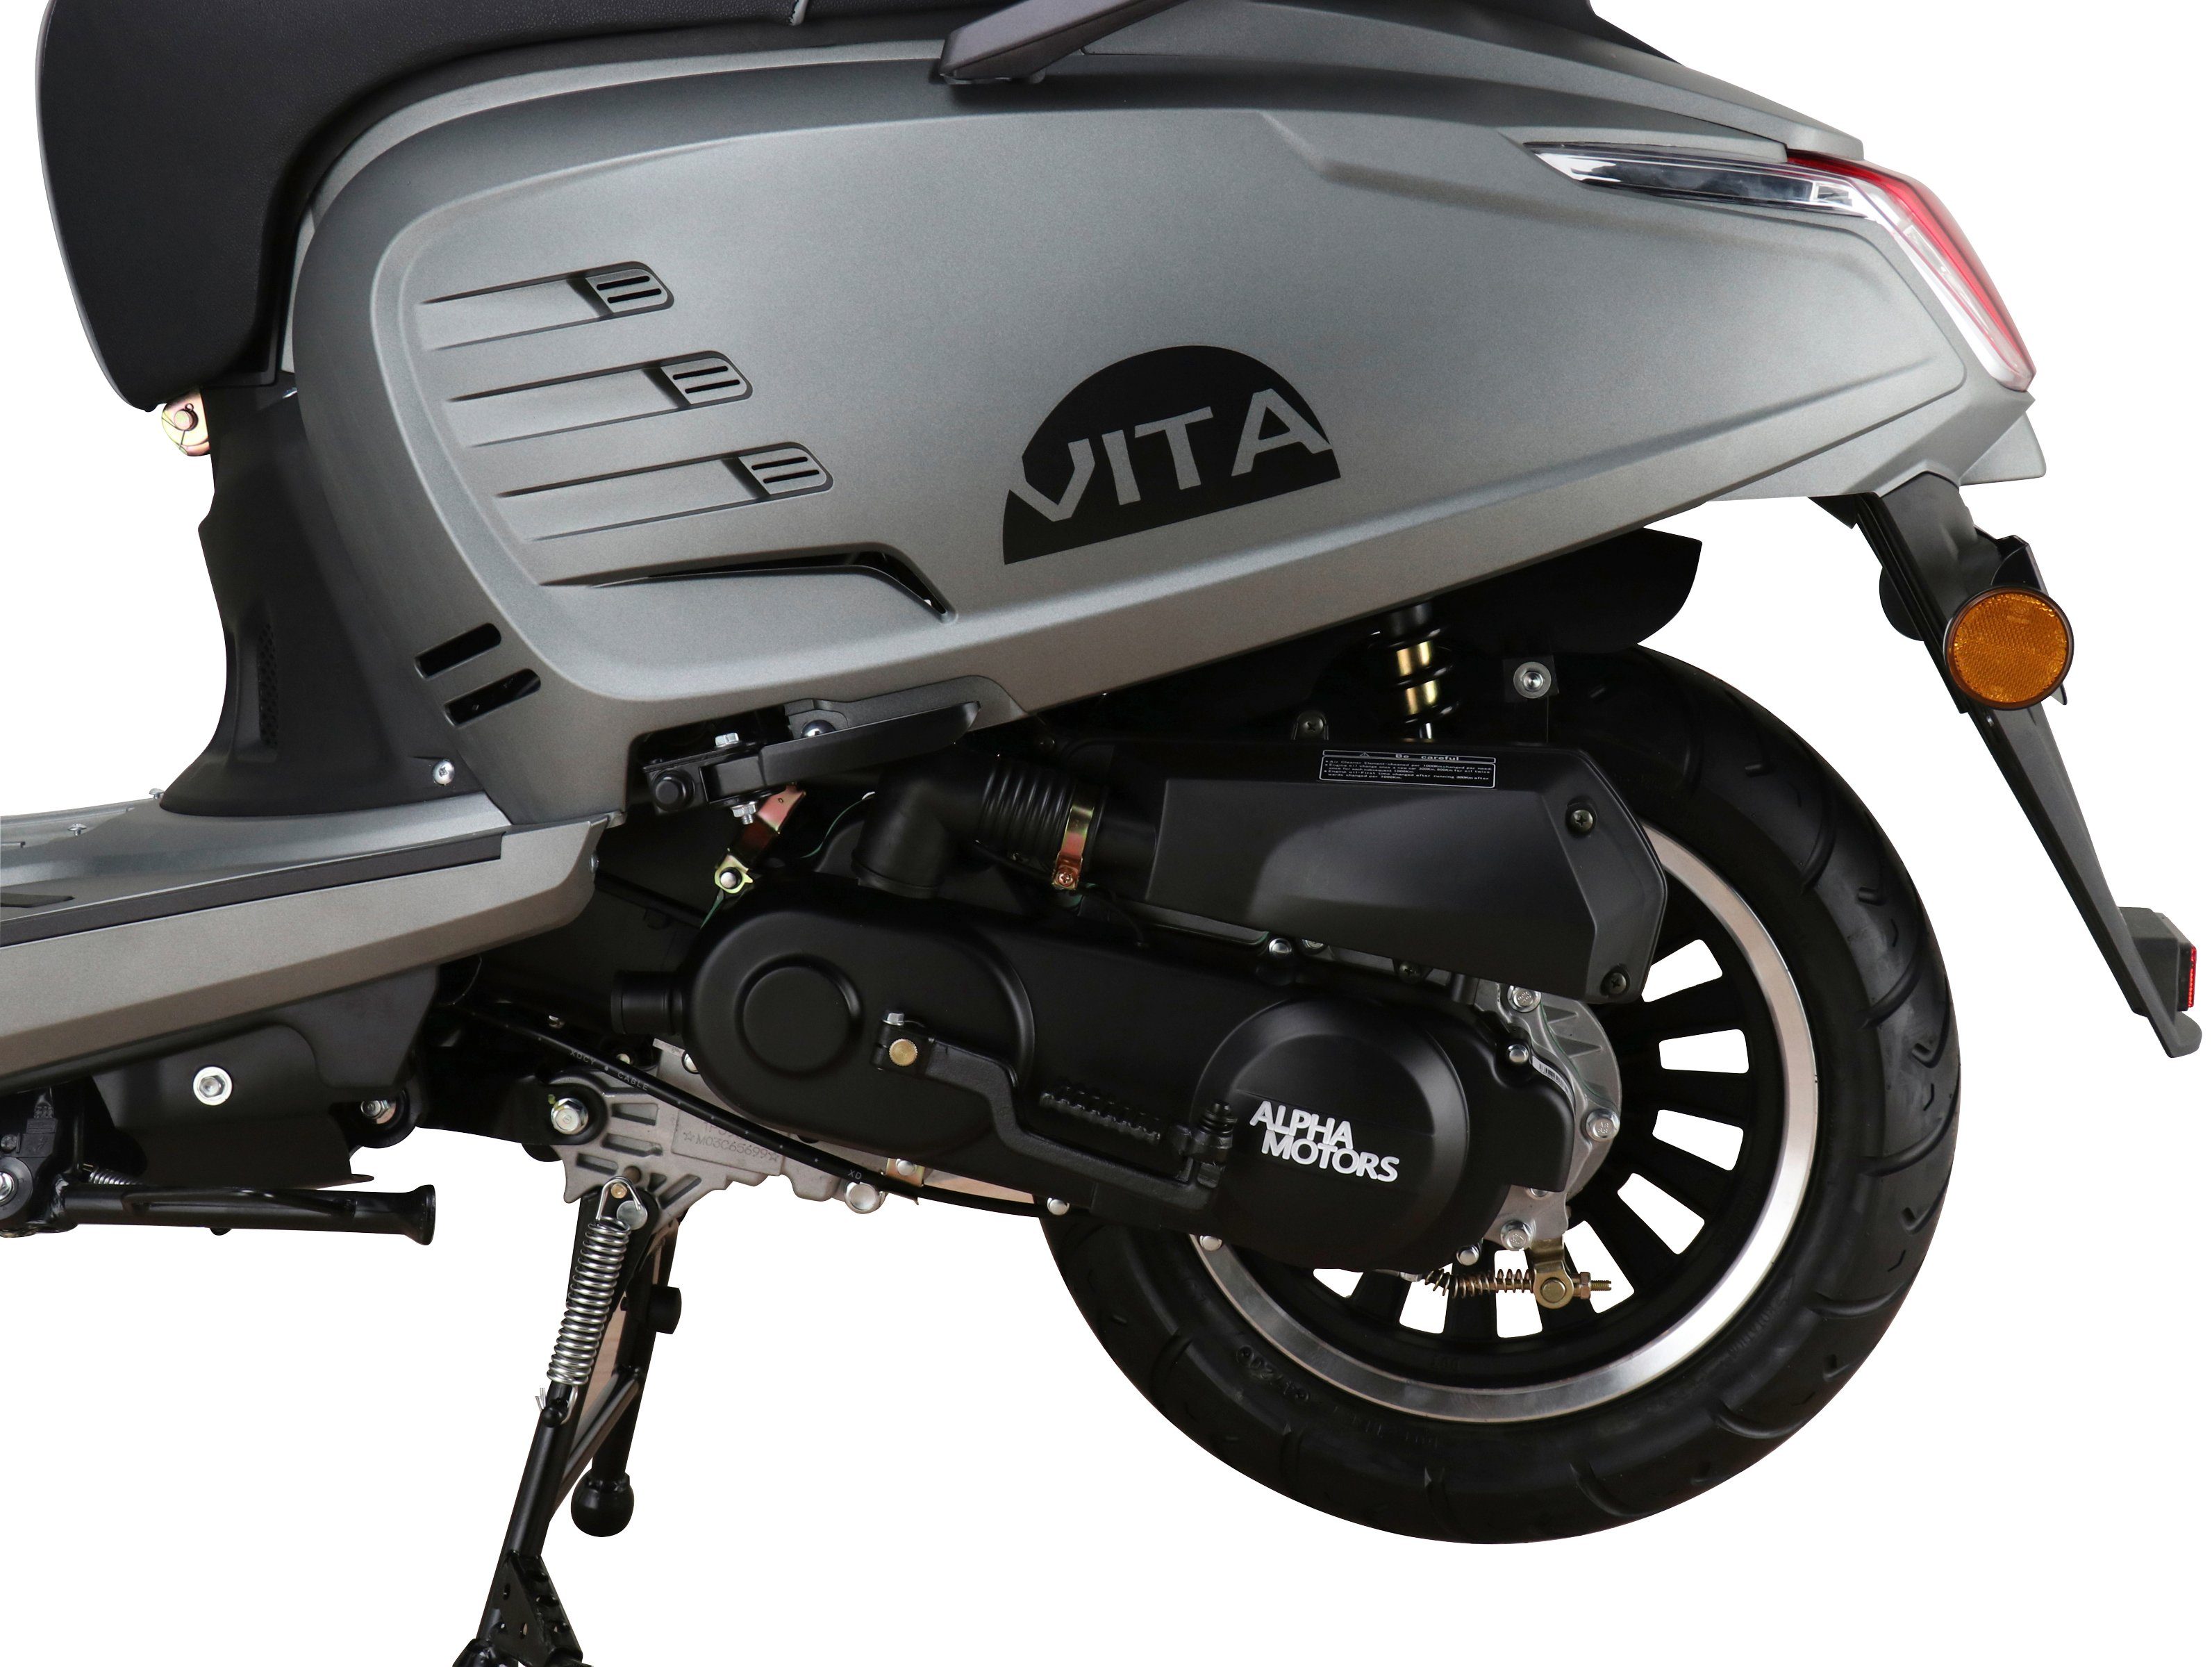 125 5 Motorroller Motors ccm, Alpha Euro km/h, 85 Vita,